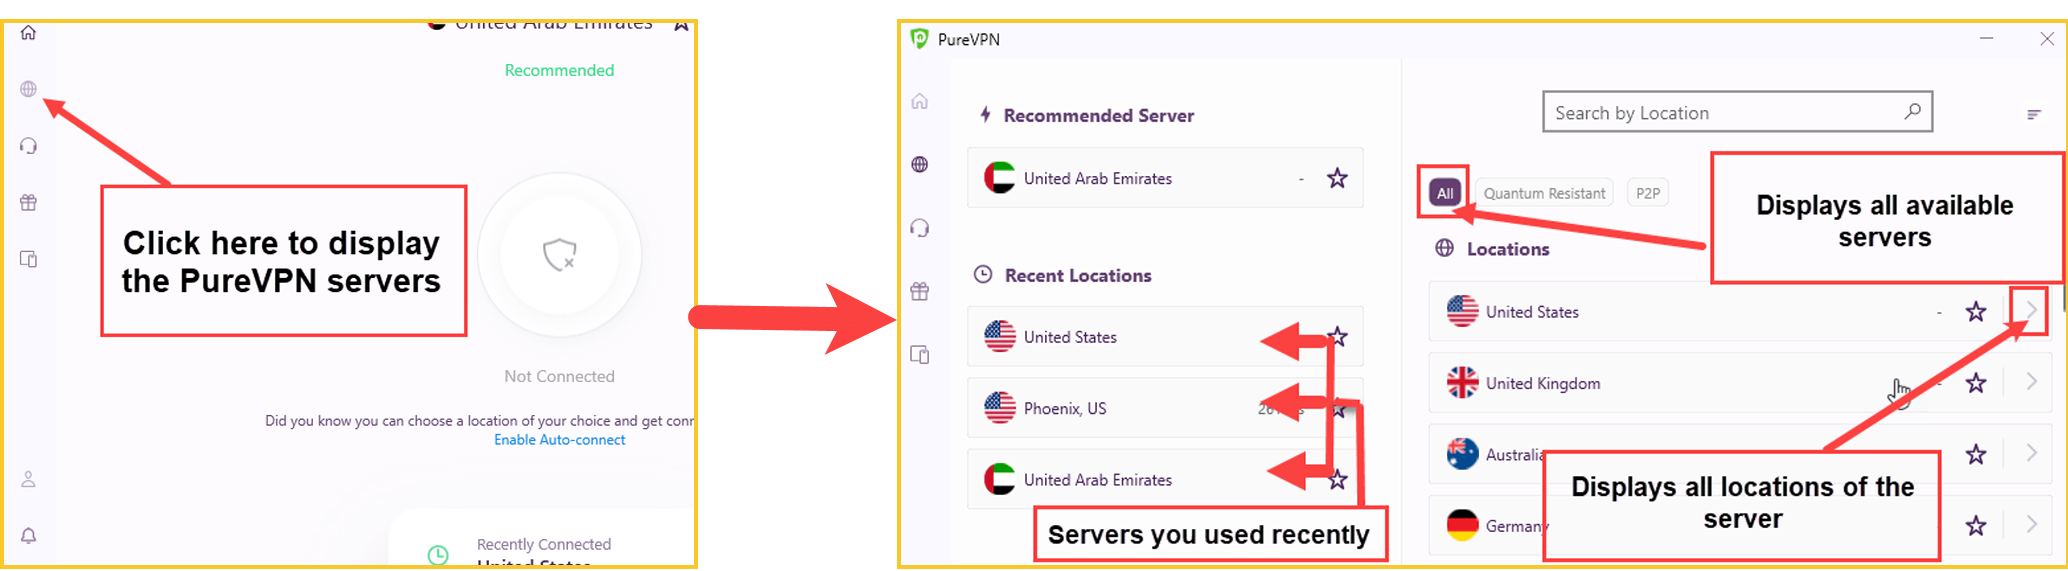 purevpn-server-locations-interface-in-UK